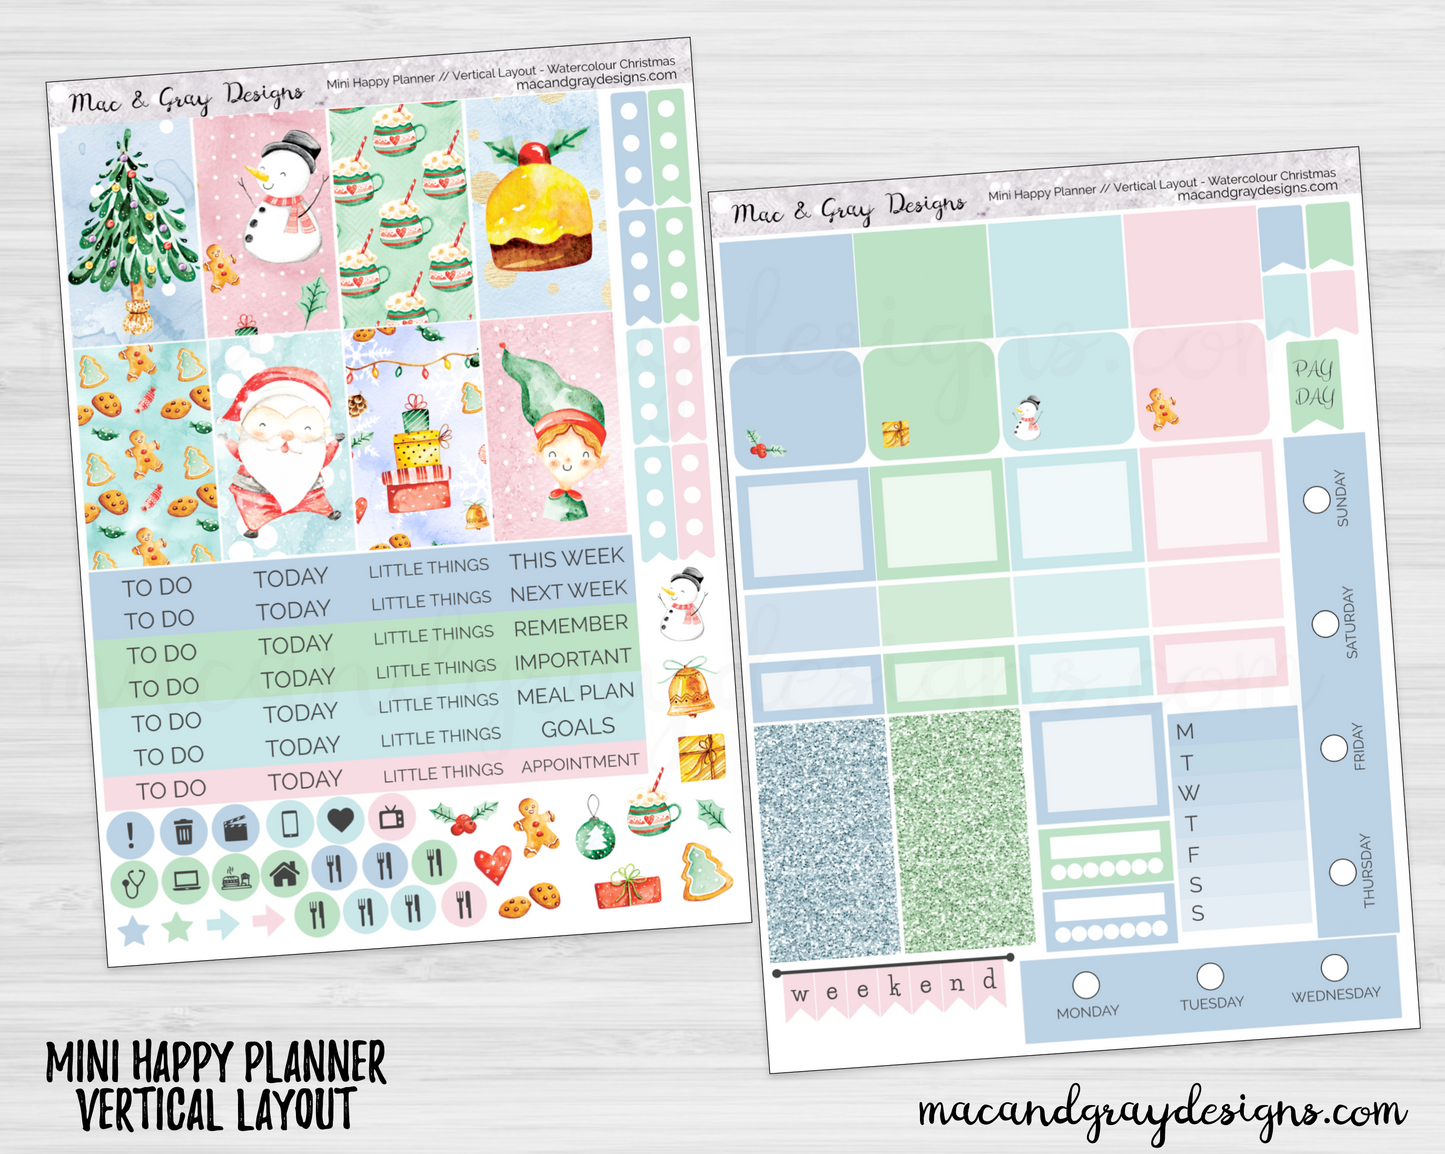 Joyful Christmas Weekly Kit – Stickers by AshleyK